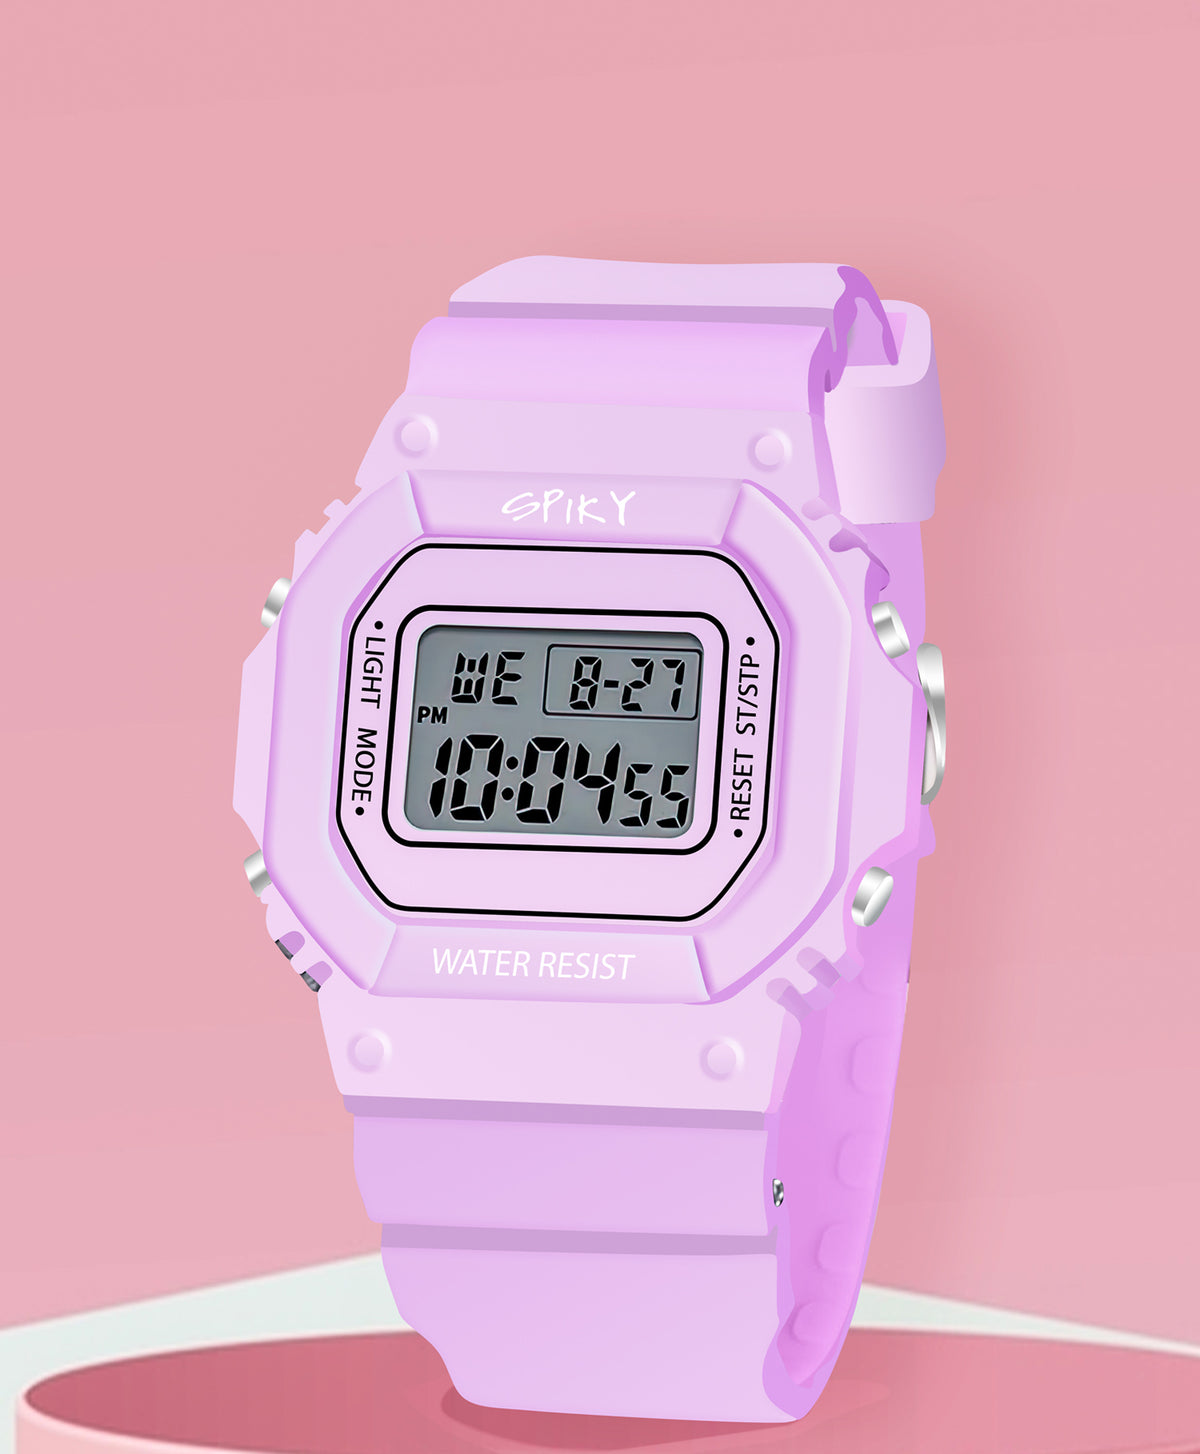 Spiky Rectangle Sports Digital Watch - Purple